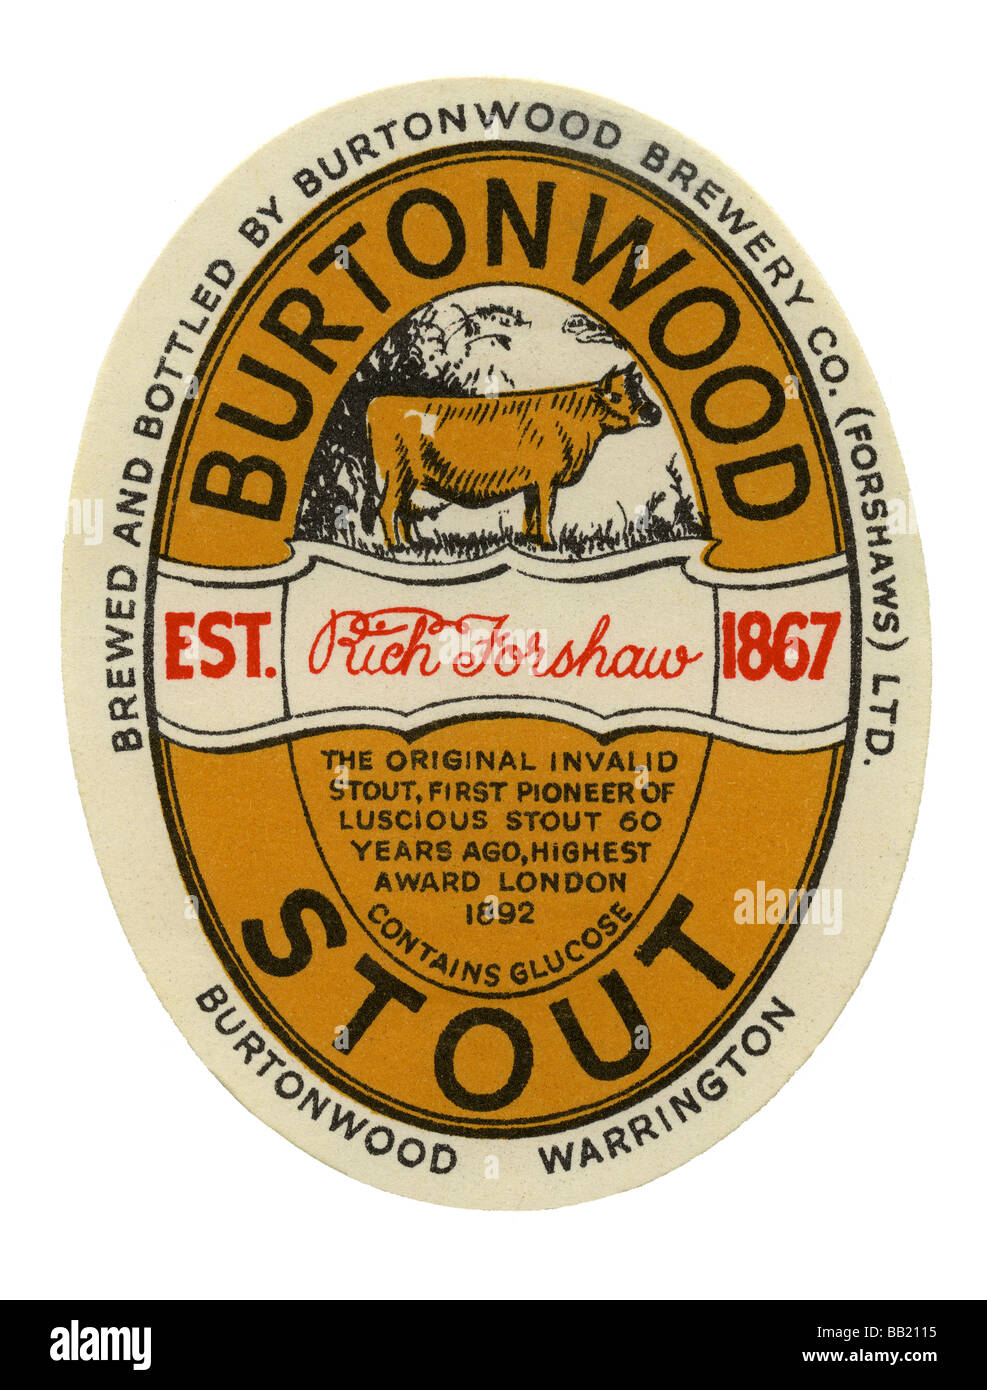 Old British beer label for Burtonwood's Stout, Warrington, Cheshire Stock Photo